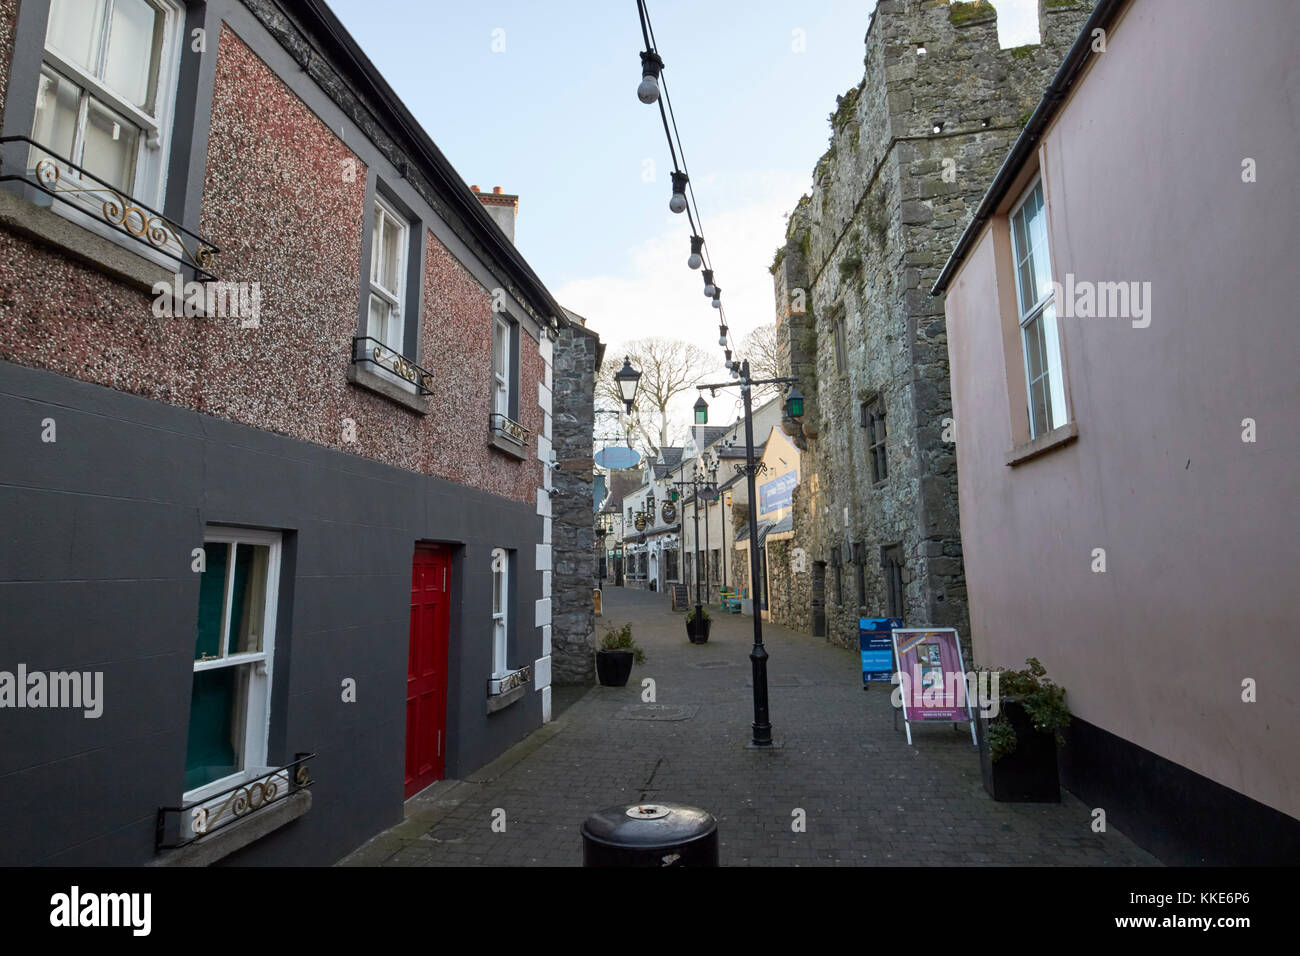 Stretto tholsel storico street layout medievale carlingford County Louth Repubblica di Irlanda Foto Stock